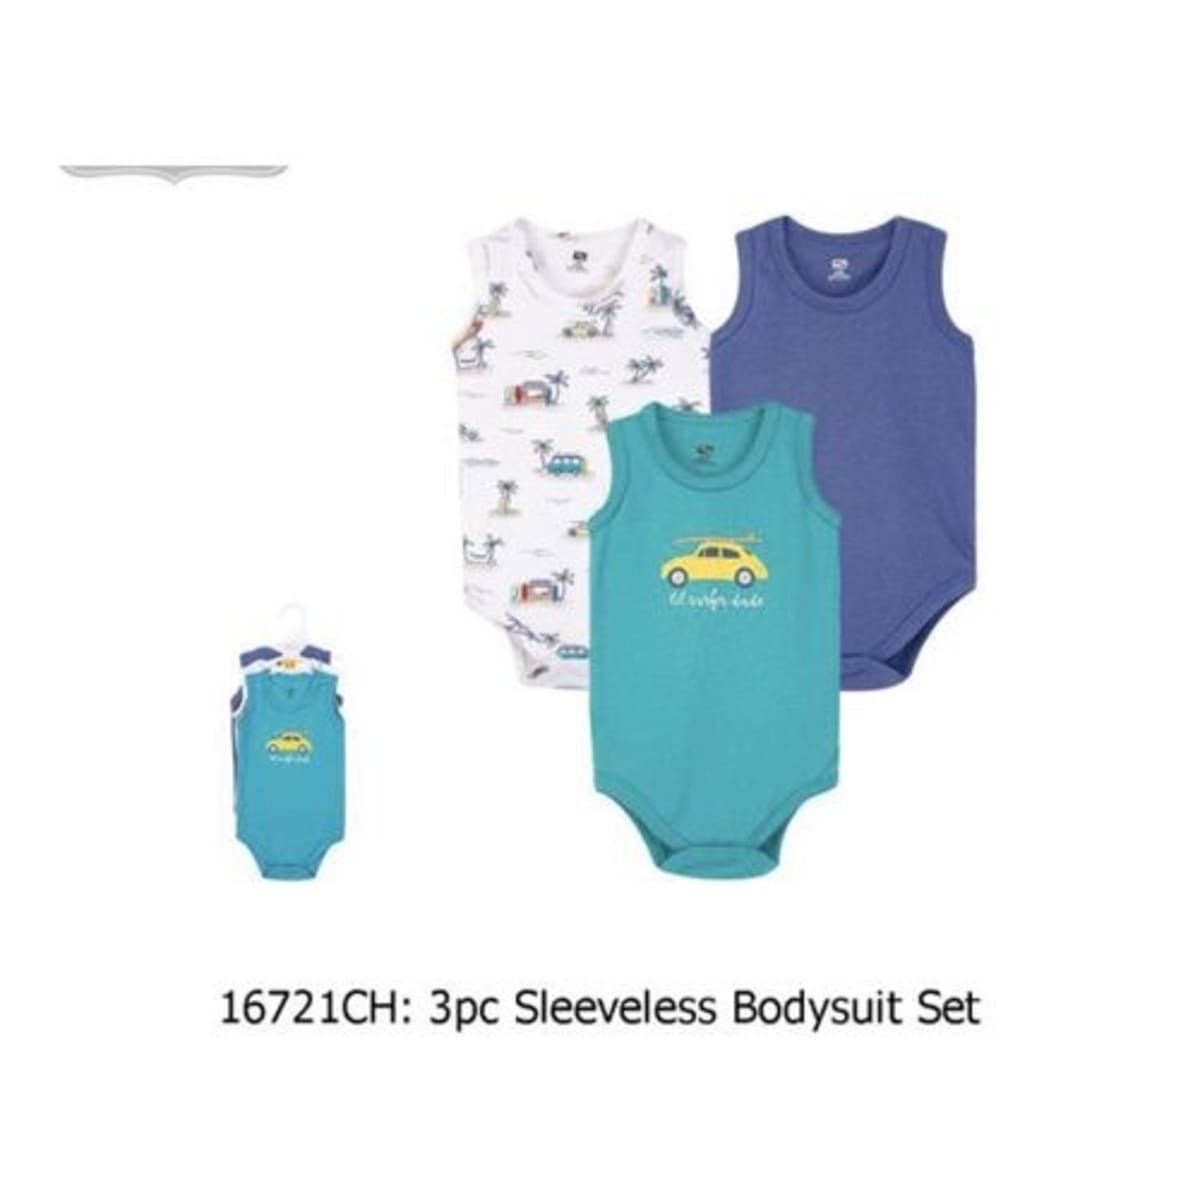 Hudson Baby Sleeveless Bodysuits - 3 Pieces